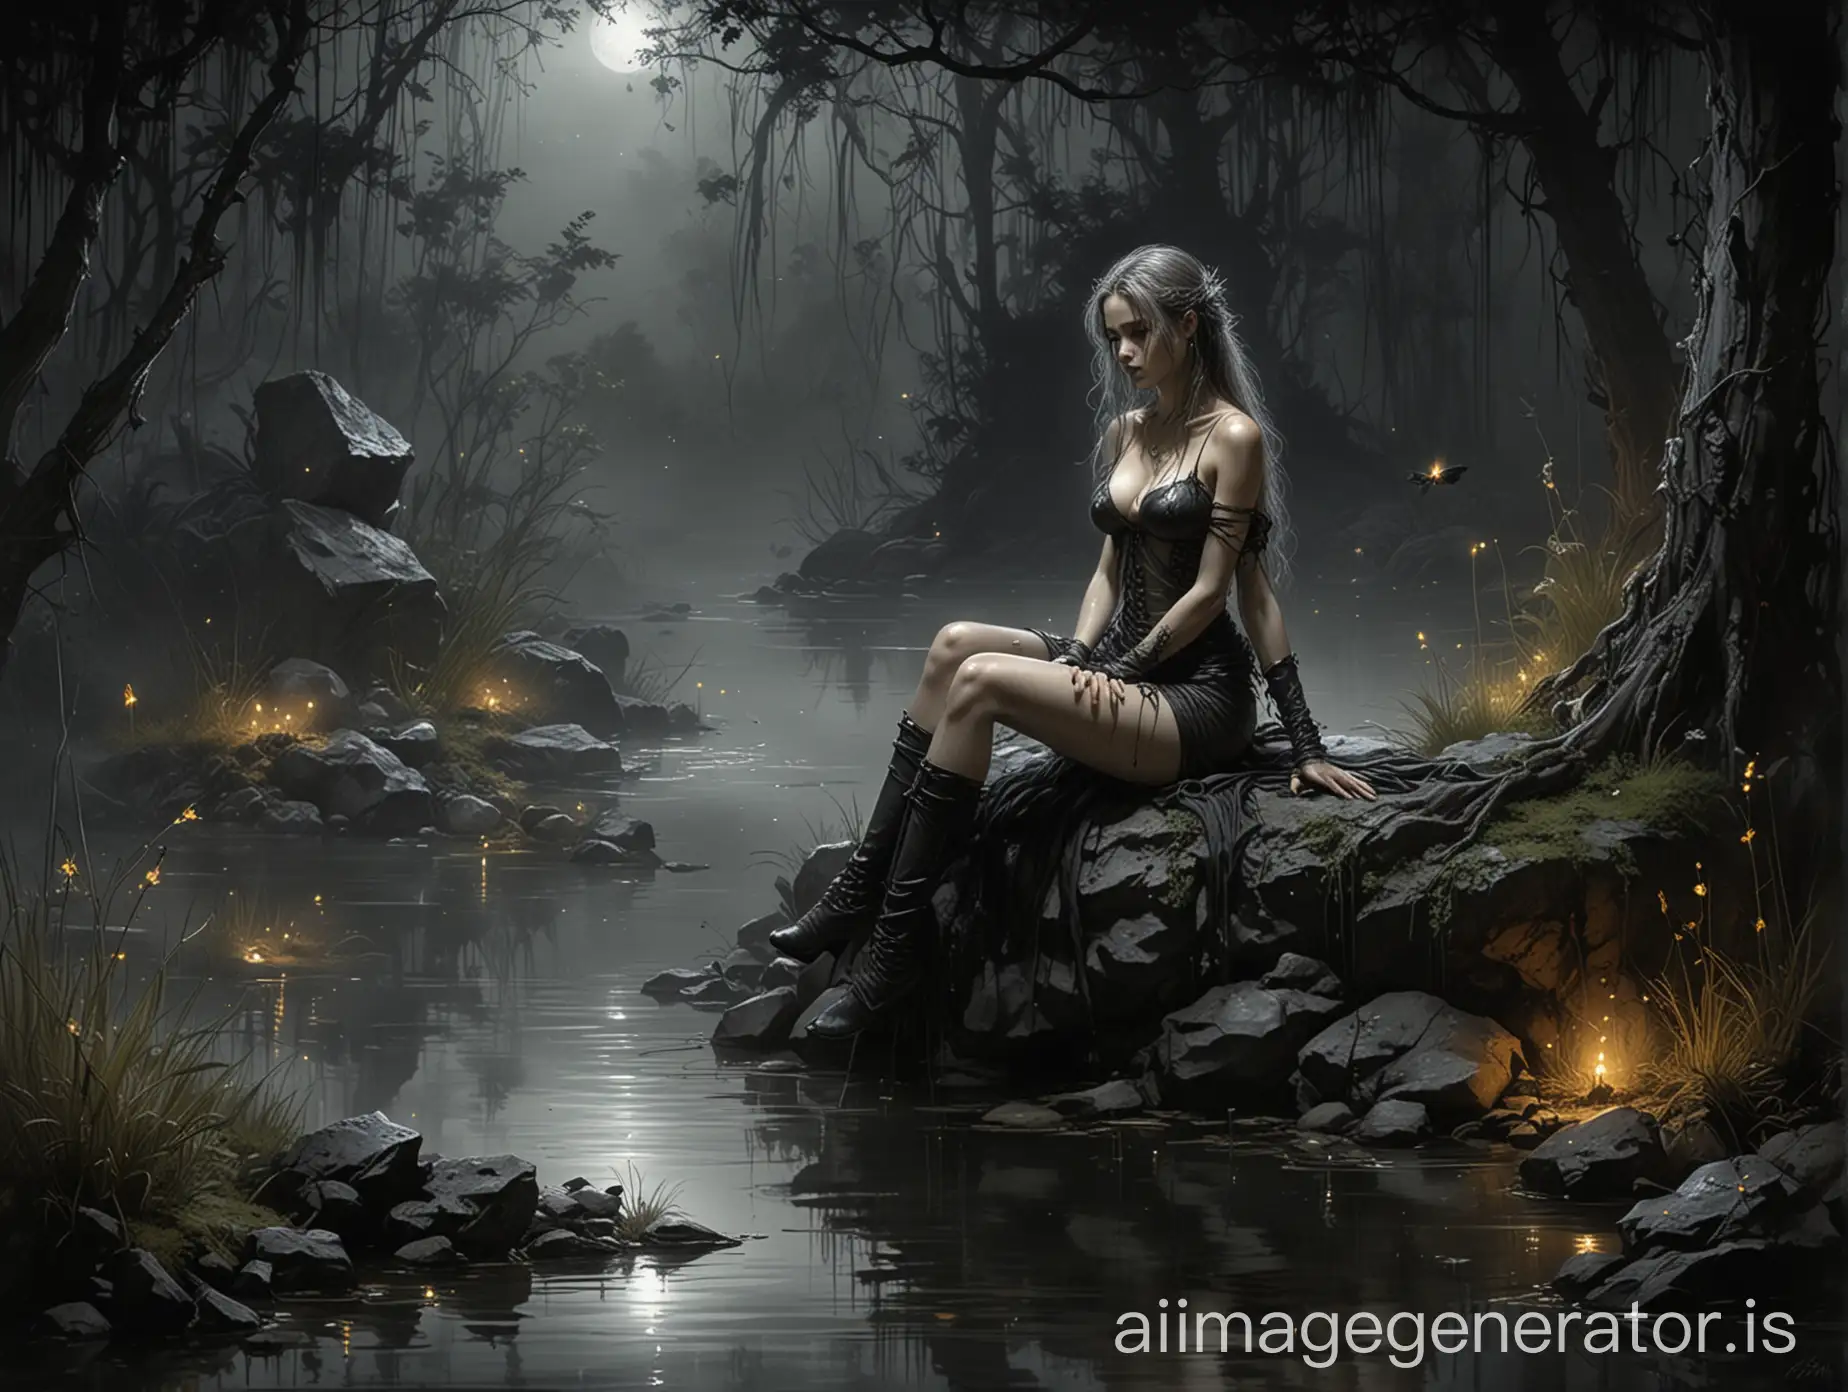 Dark-Art-Inspired-by-Luis-Royo-Nighttime-Scene-in-Gloomy-Gardenscape-with-Fireflies